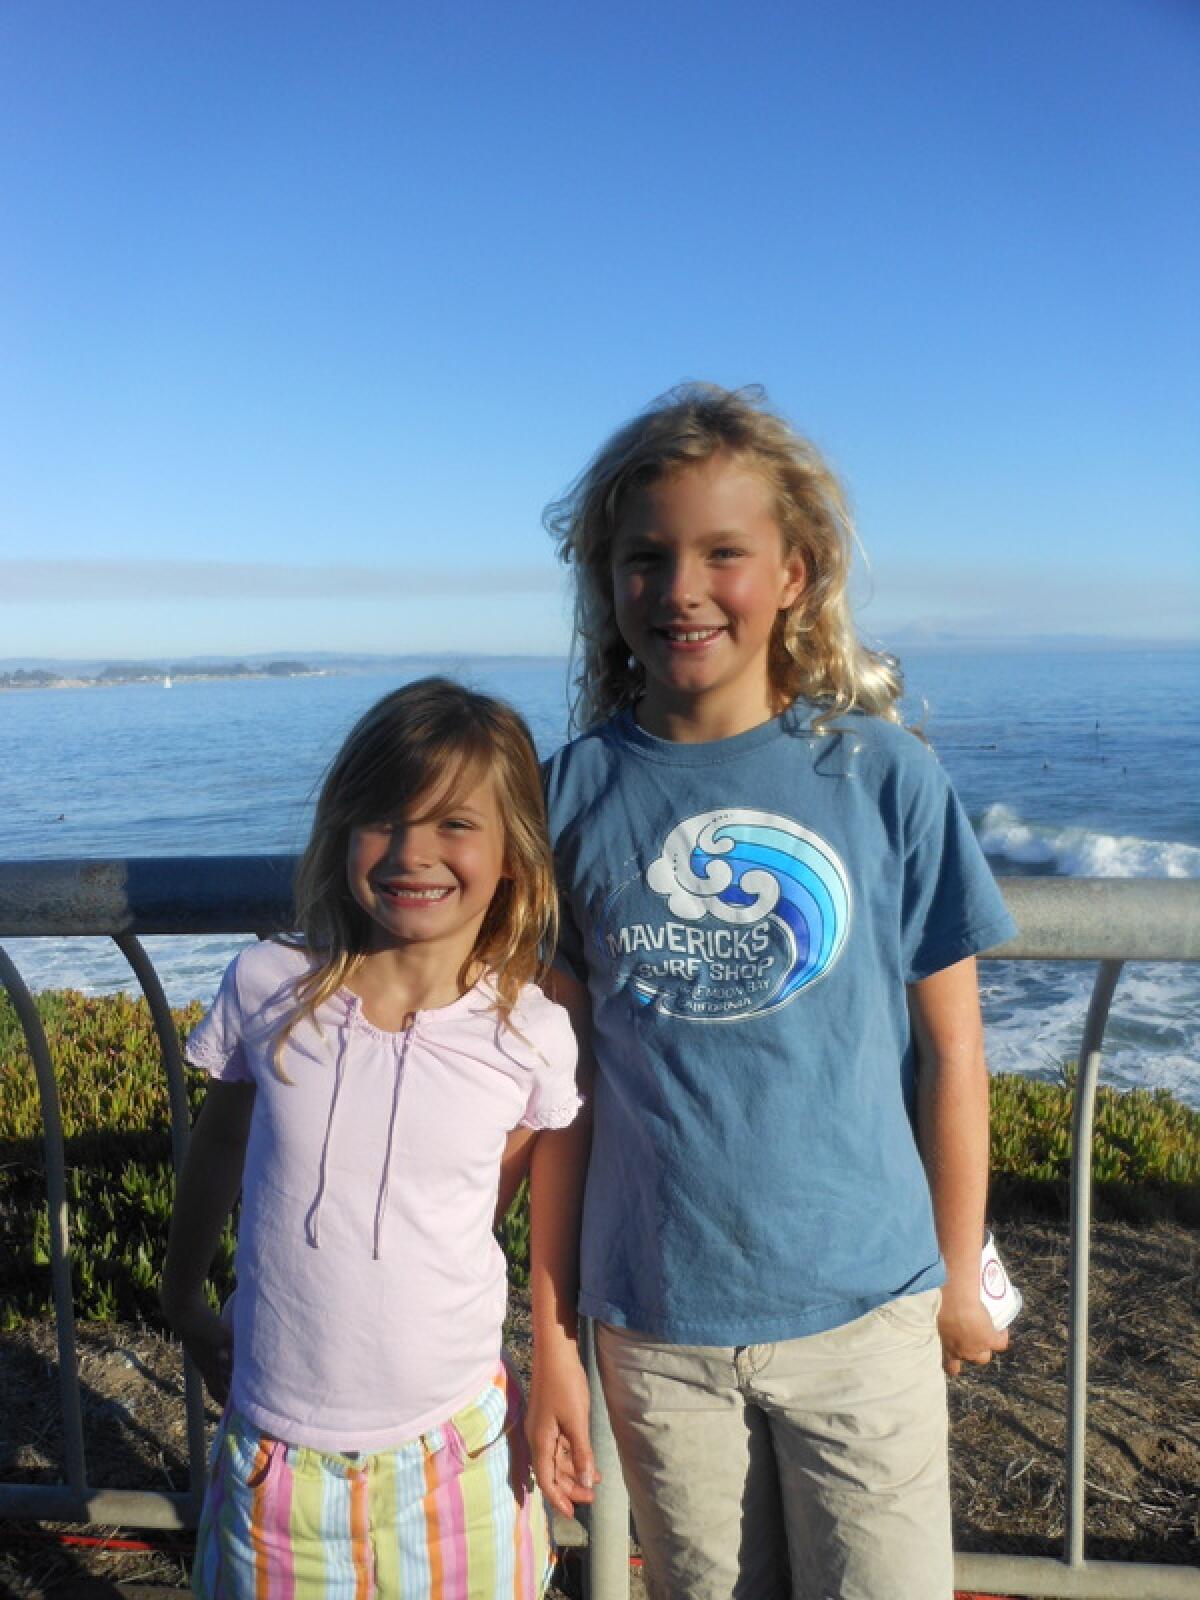 Two girls standing in front of an ocean vista